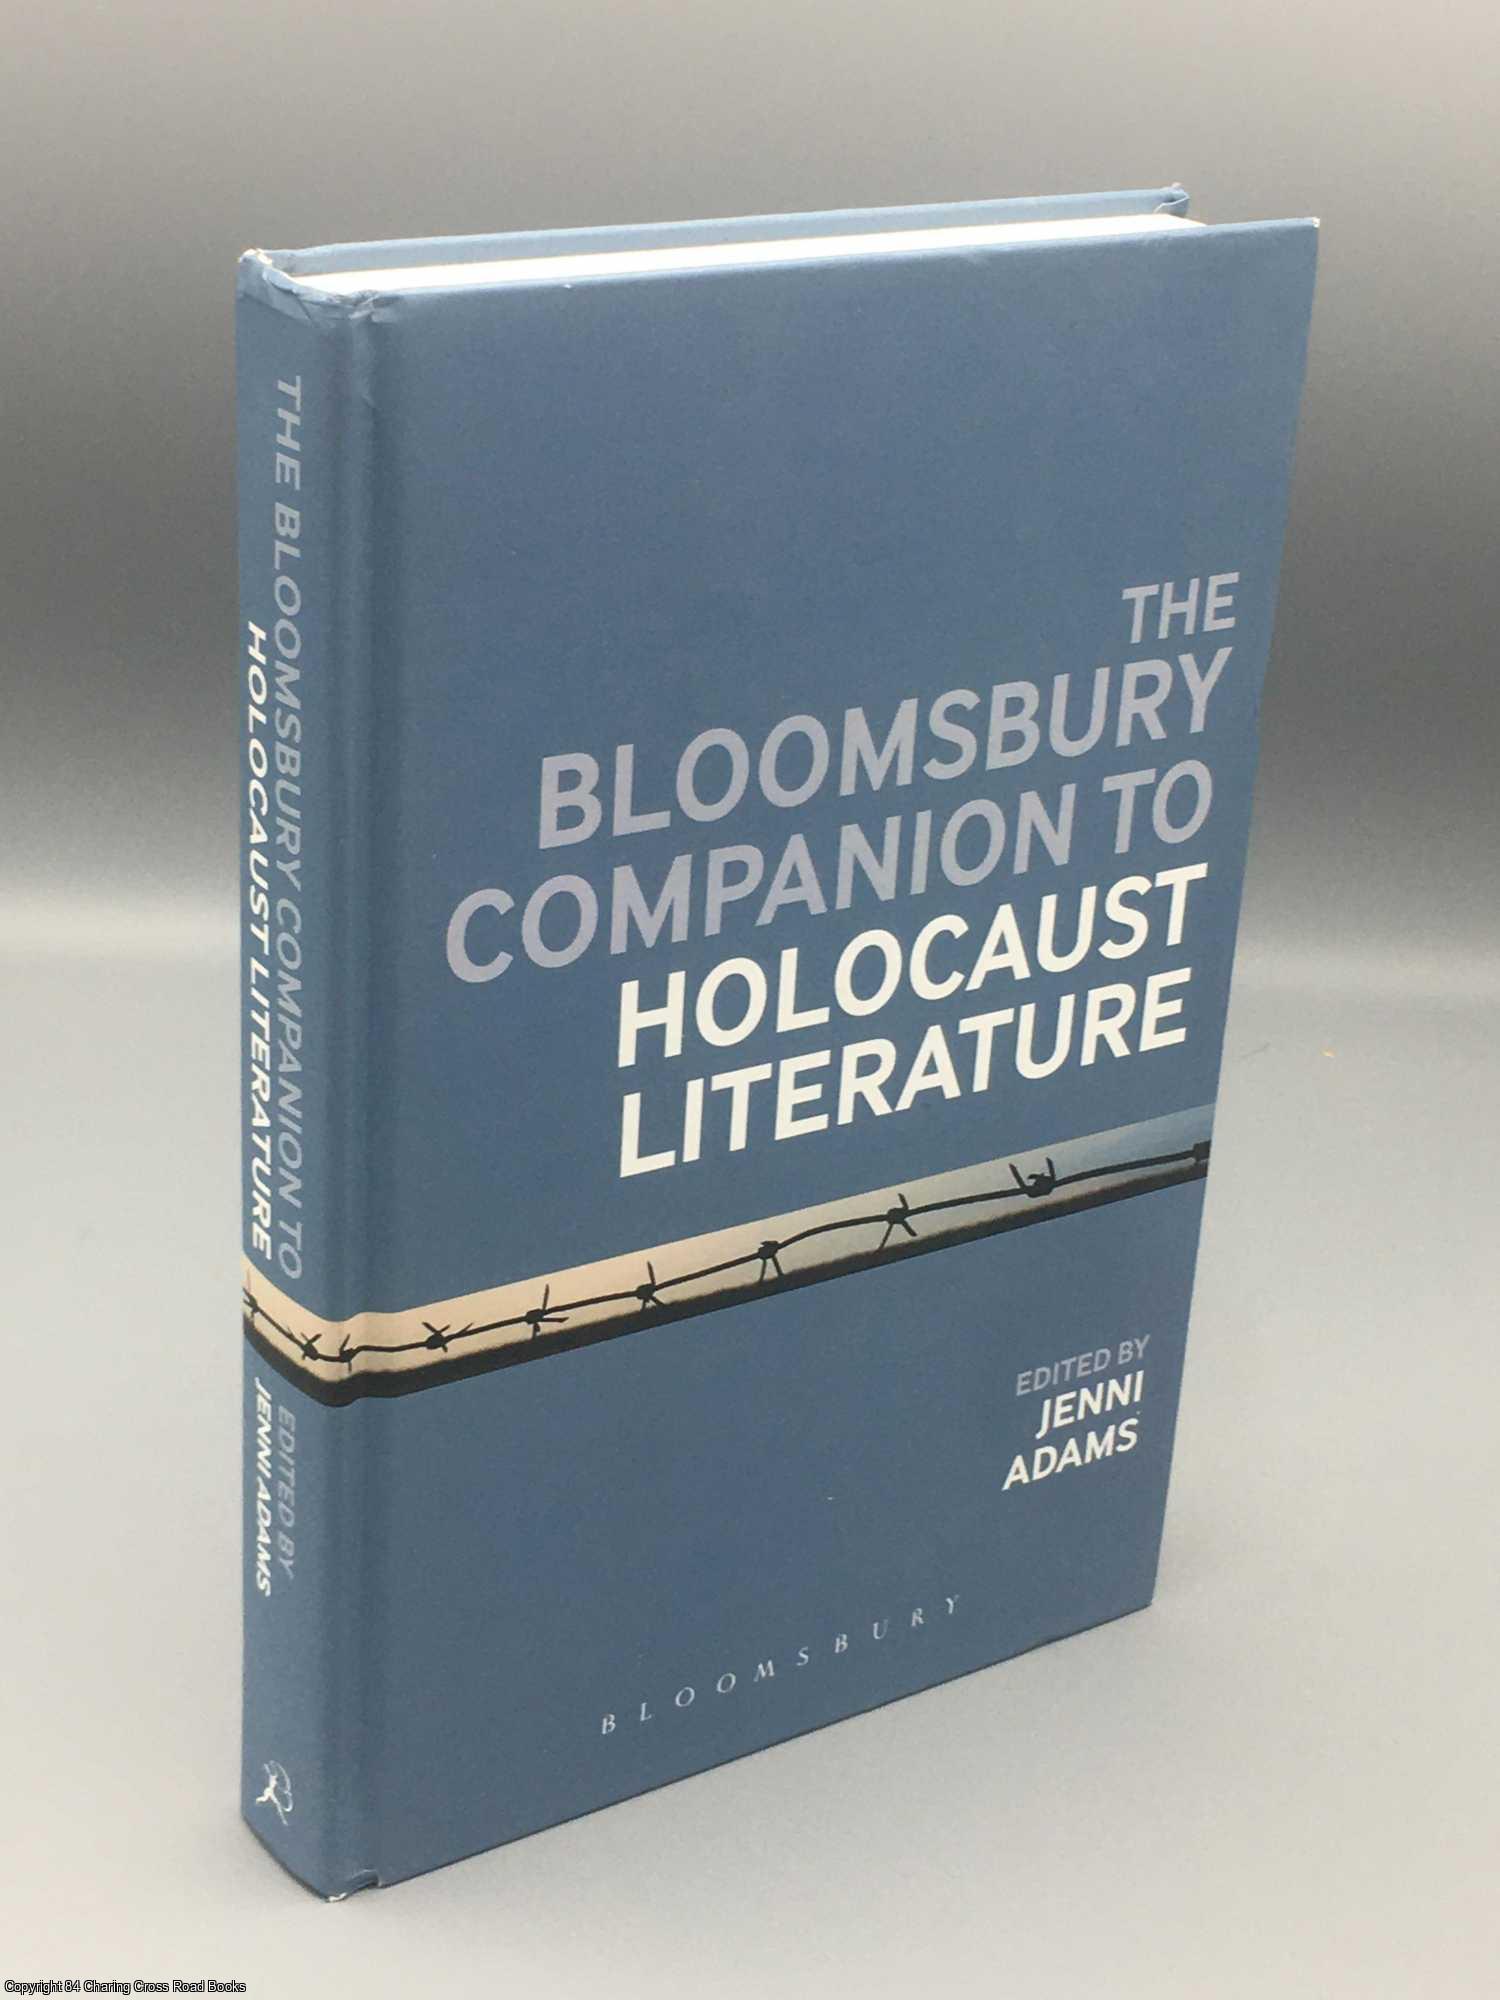 Adams, Jenni - The Bloomsbury Companion to Holocaust Literature